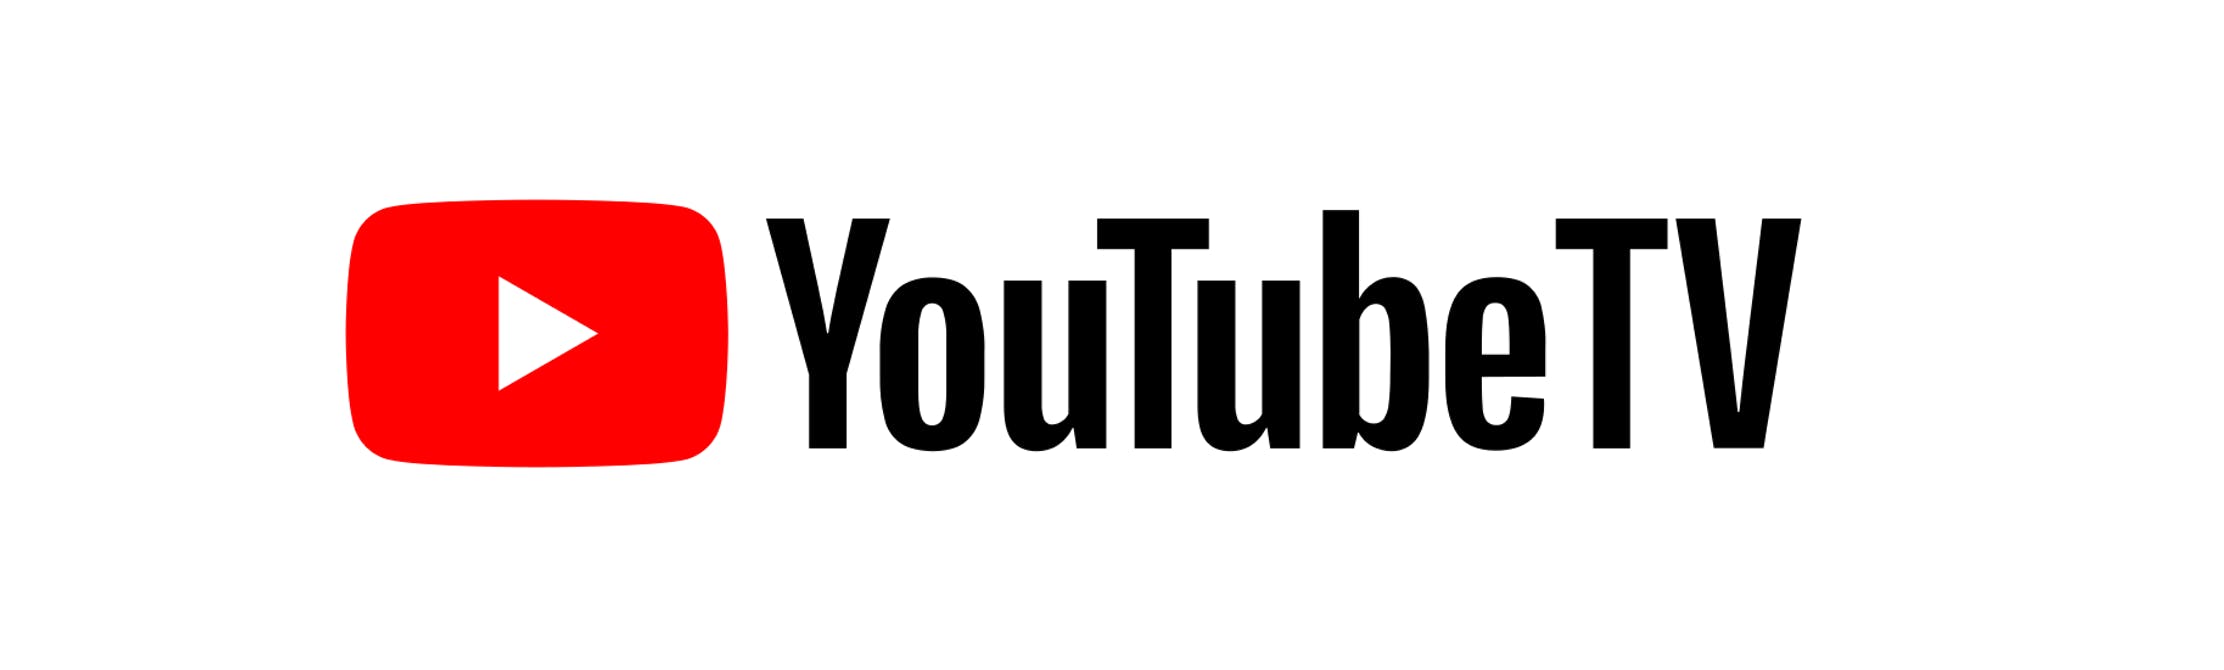 Youtube TV Streaming Logo